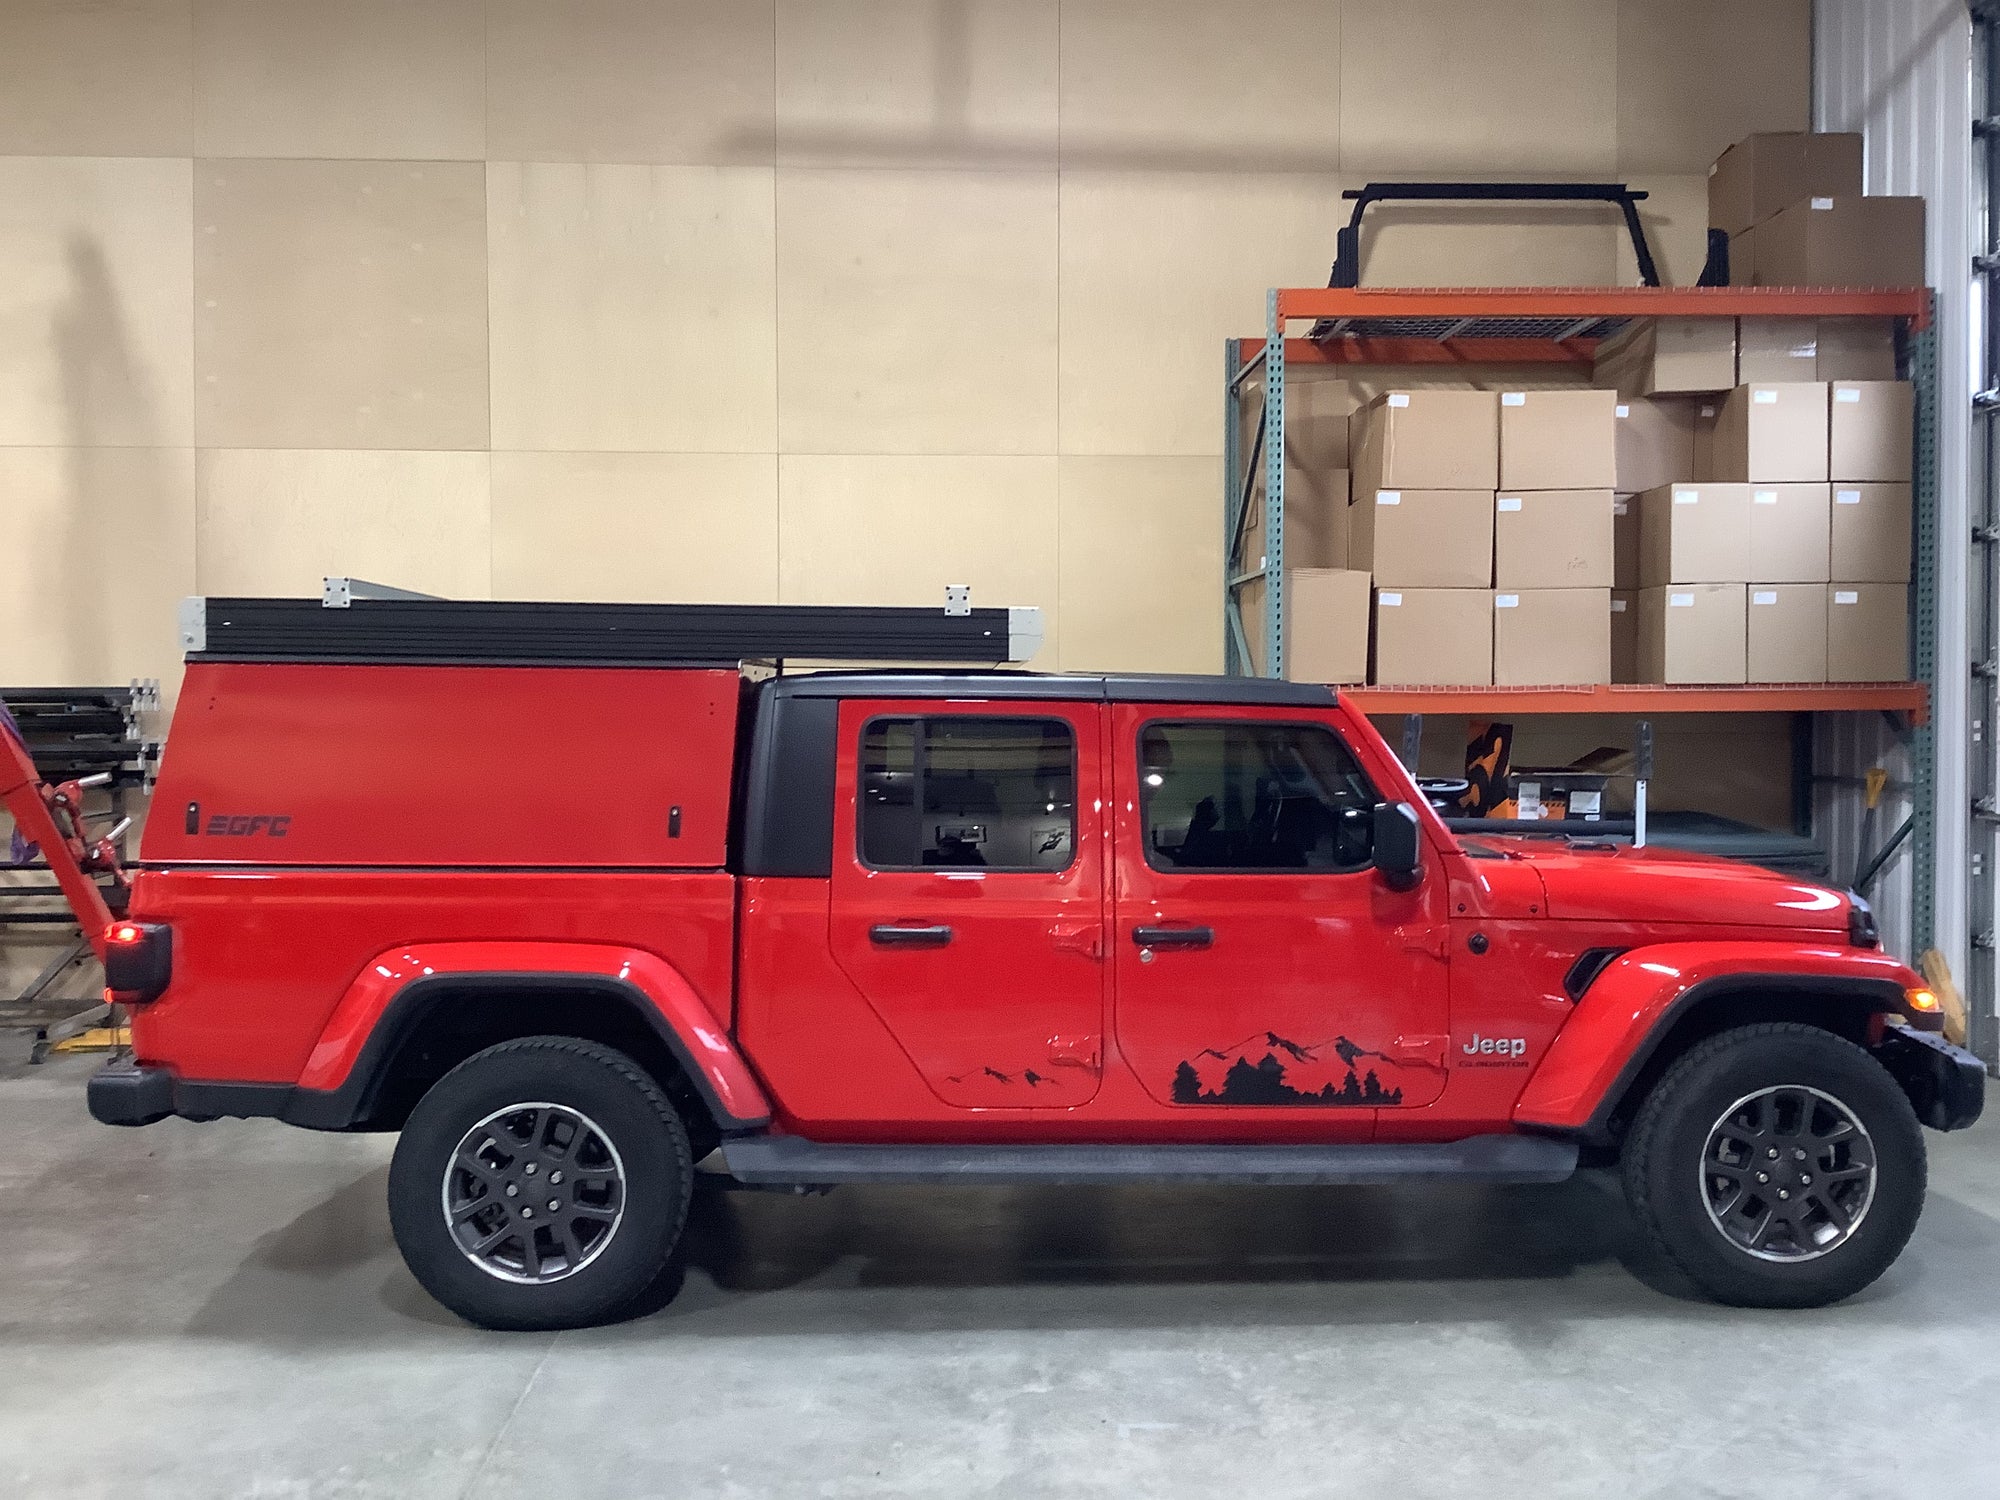 2020 Jeep Gladiator Camper - Build #3179